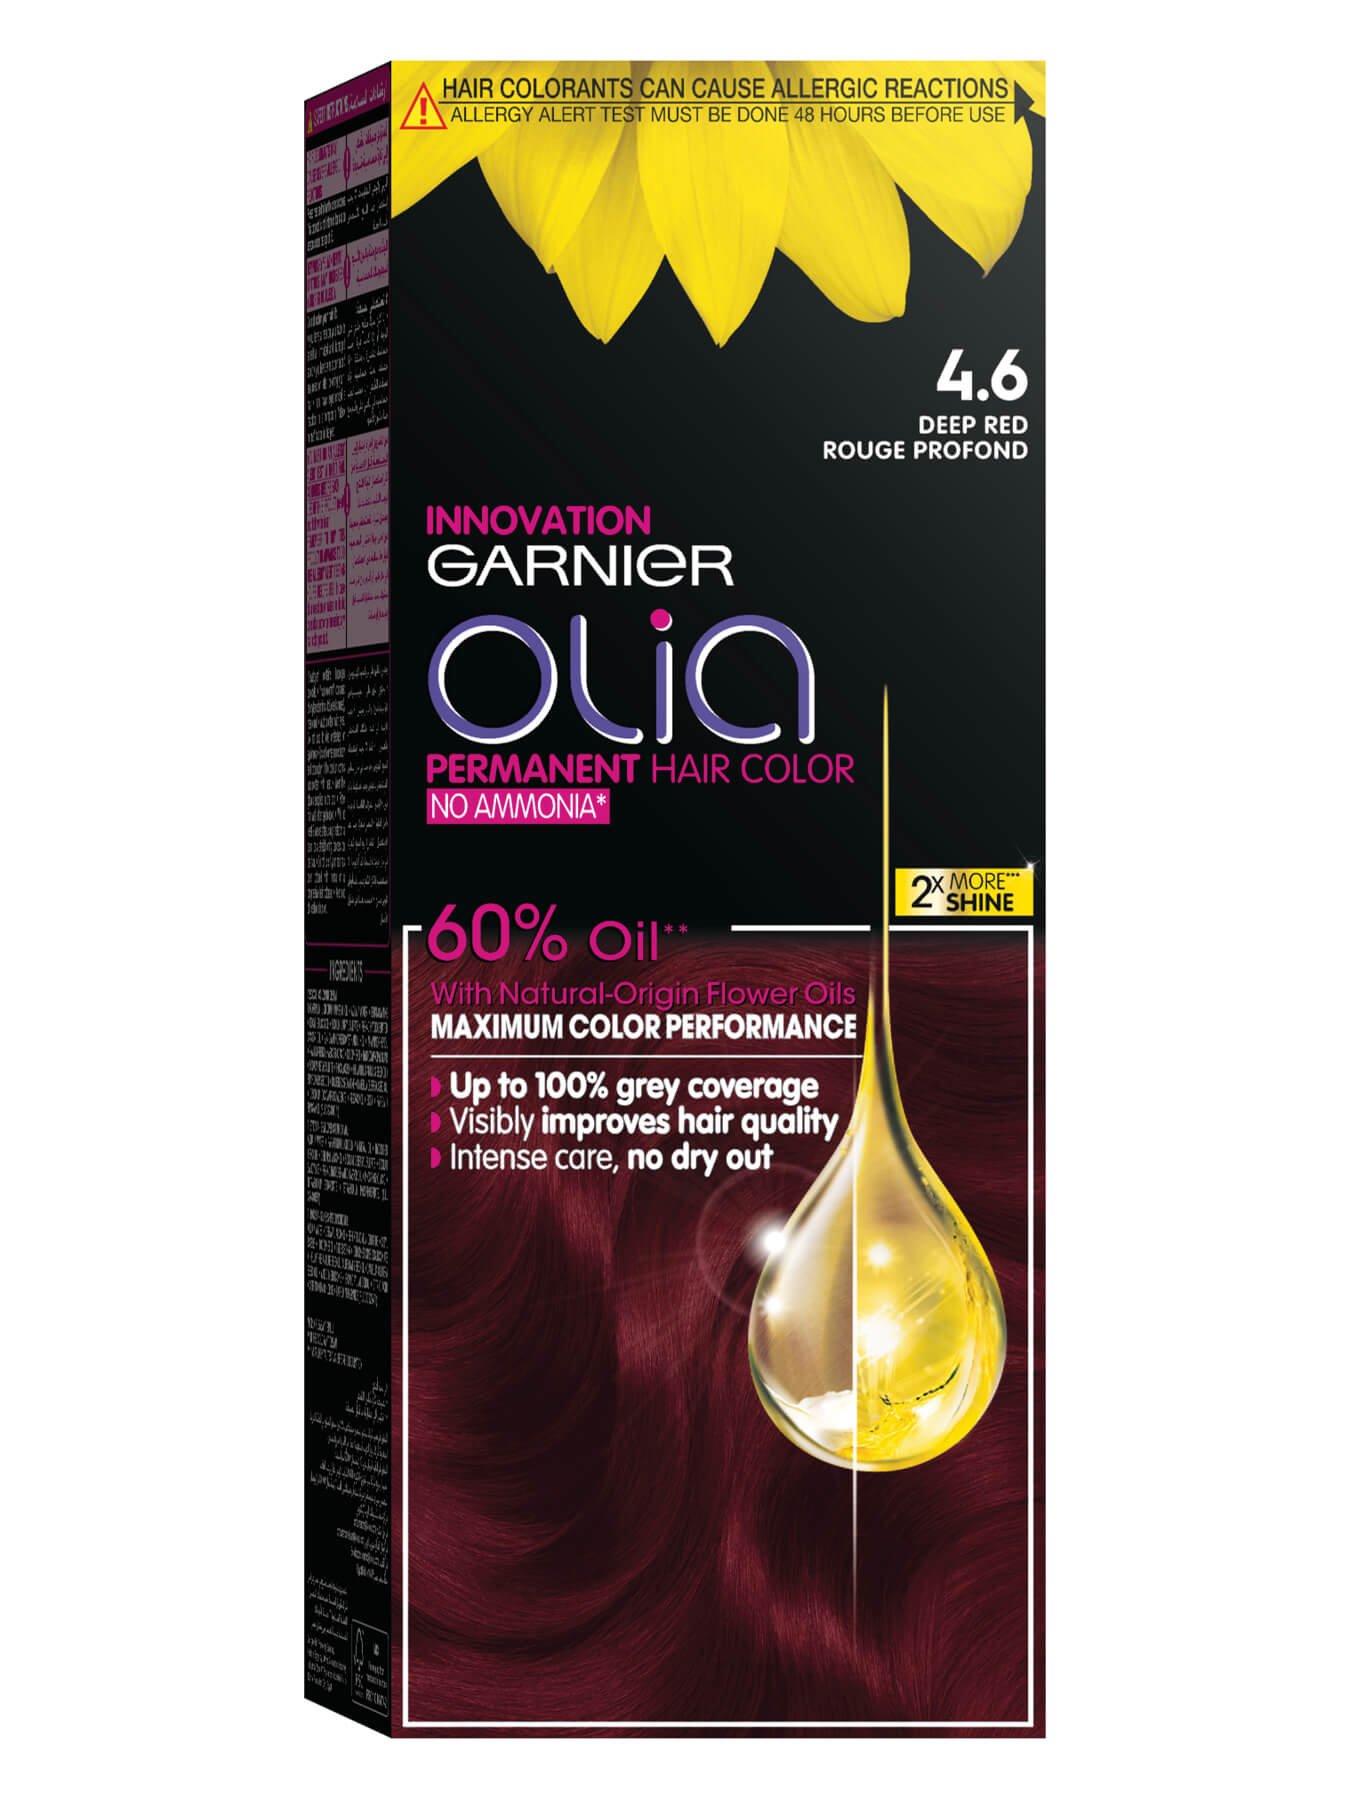 falanks Dalset Ved en fejltagelse Garnier Olia, 4.6 Deep Red, No Ammonia Permanent Haircolor, with 60% Oils